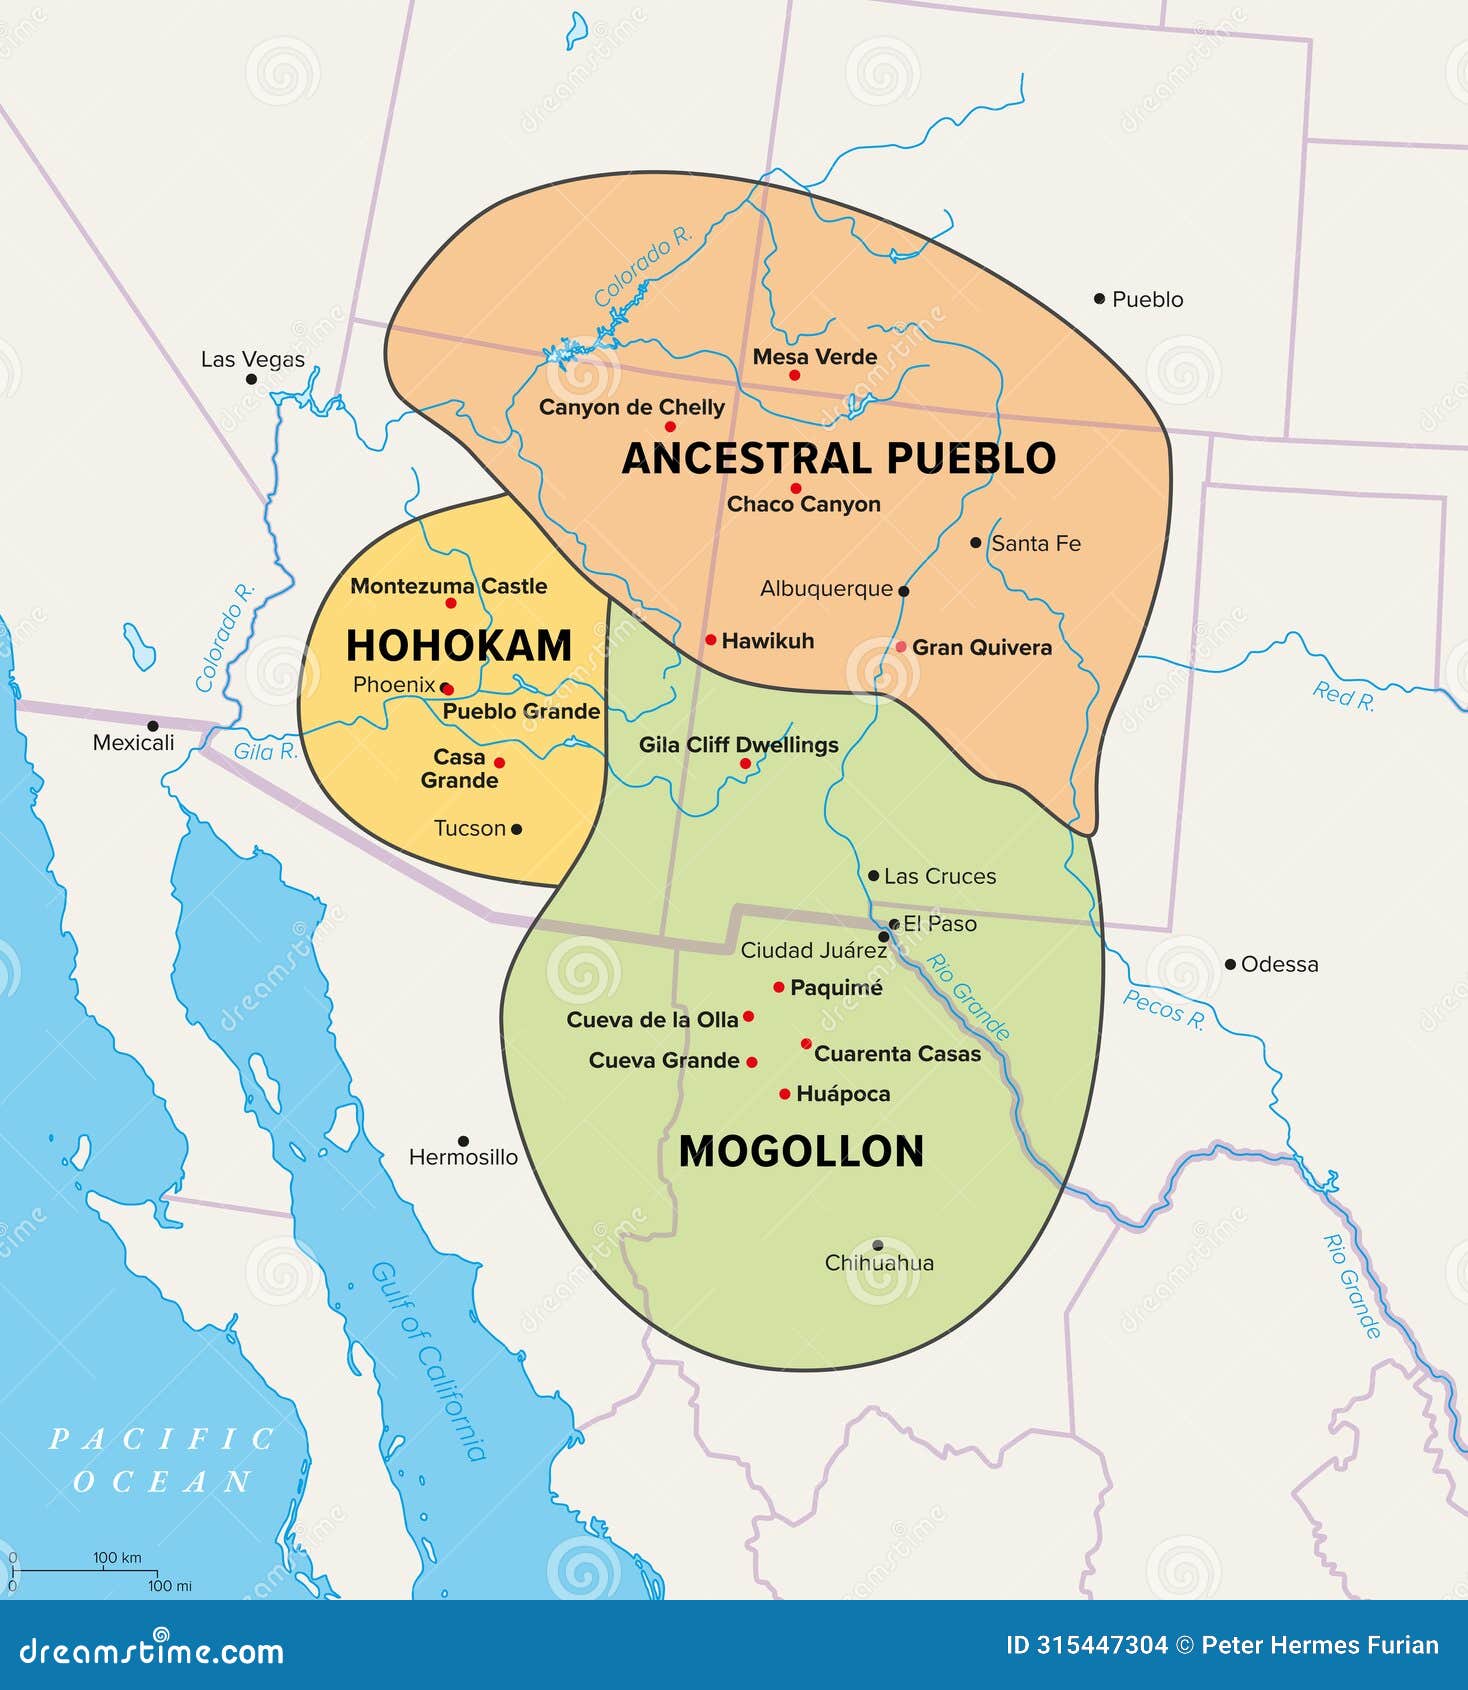 oasisamerica, a cultural region of indigenous peoples in north america